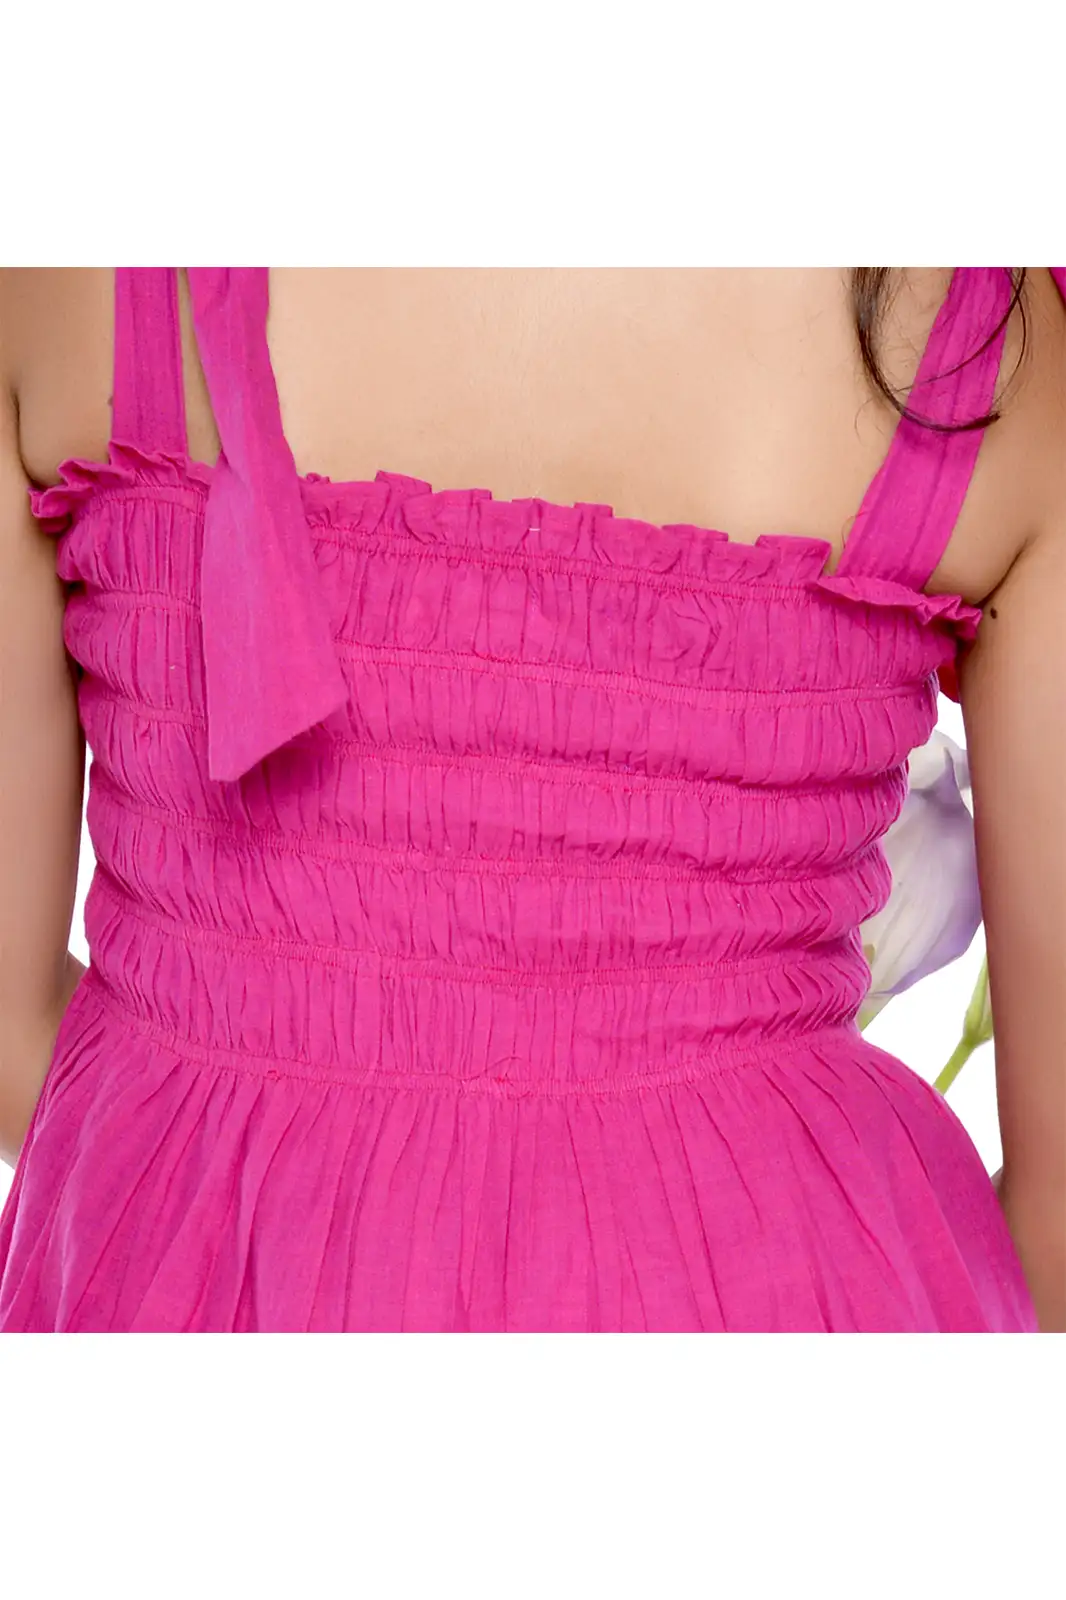 keya pink ballon knee length dress, one piece knee length dress, knee length dress party, knee length dress with sleeves, women clothing, organic clothing